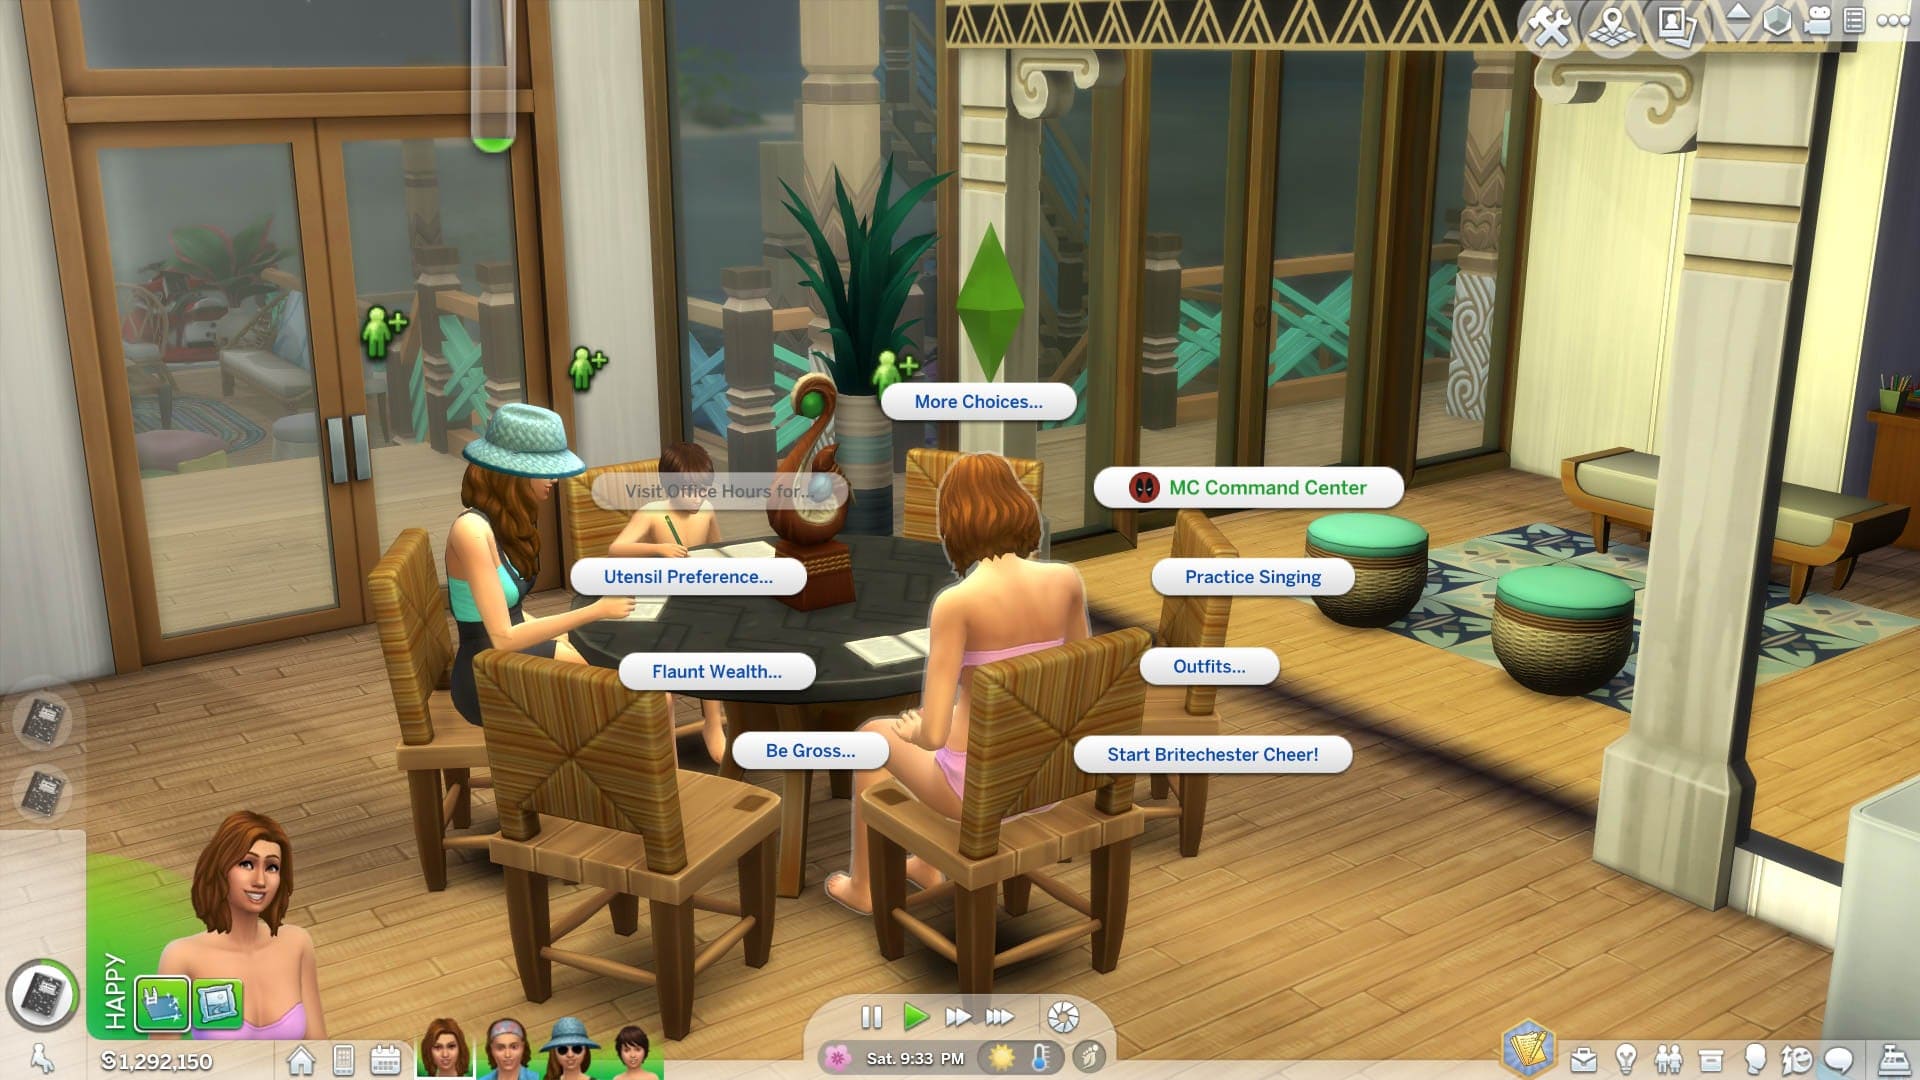 The Sims 4 MC Command Center